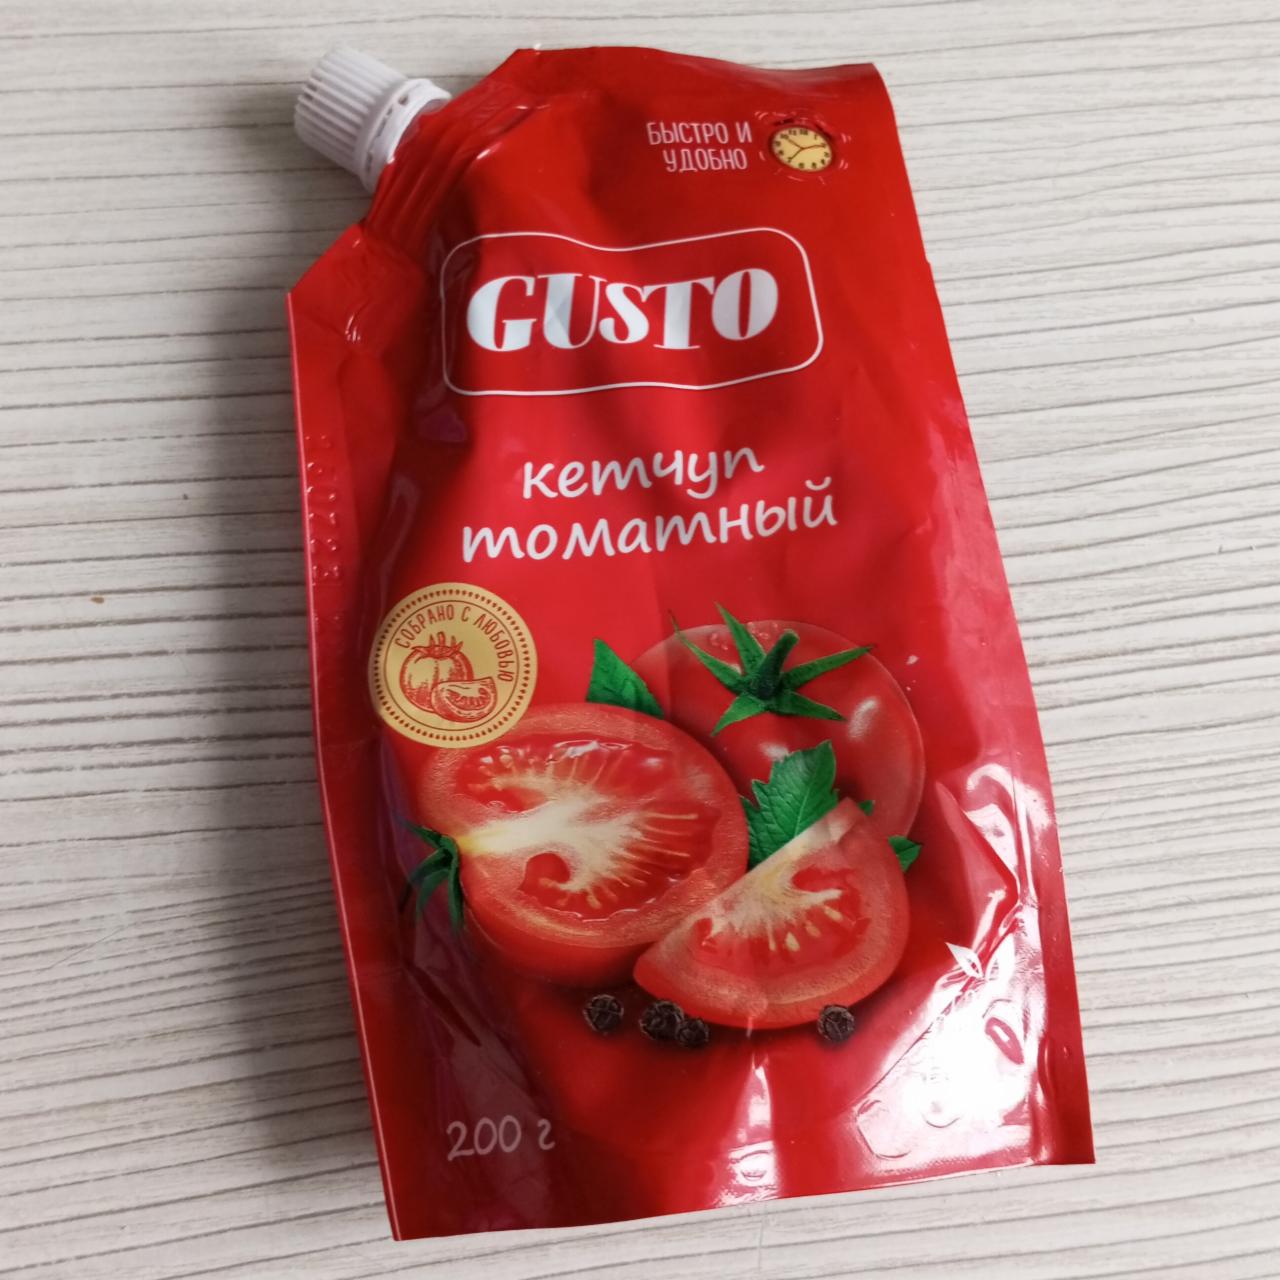 Фото - Кетчуп томатный Gusto